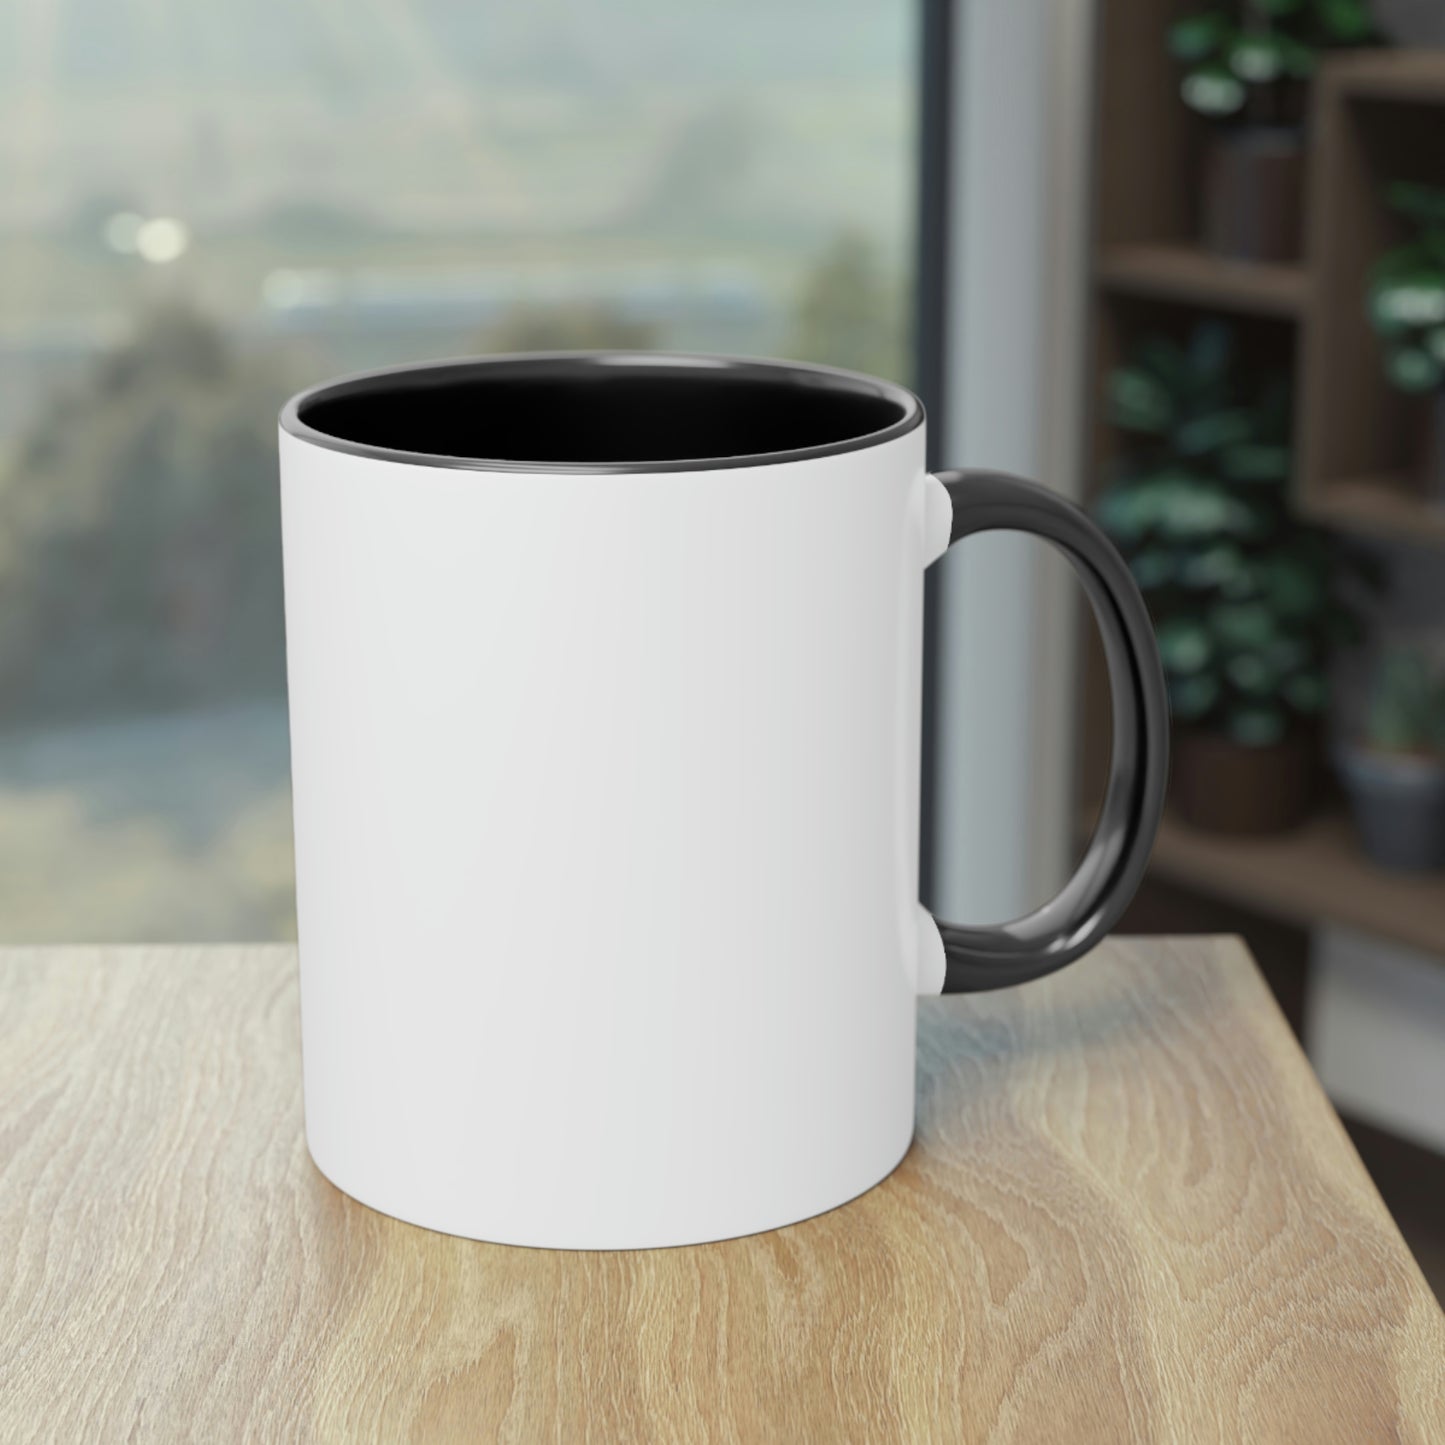 ACRWC Two-Tone Coffee Mug, 11oz